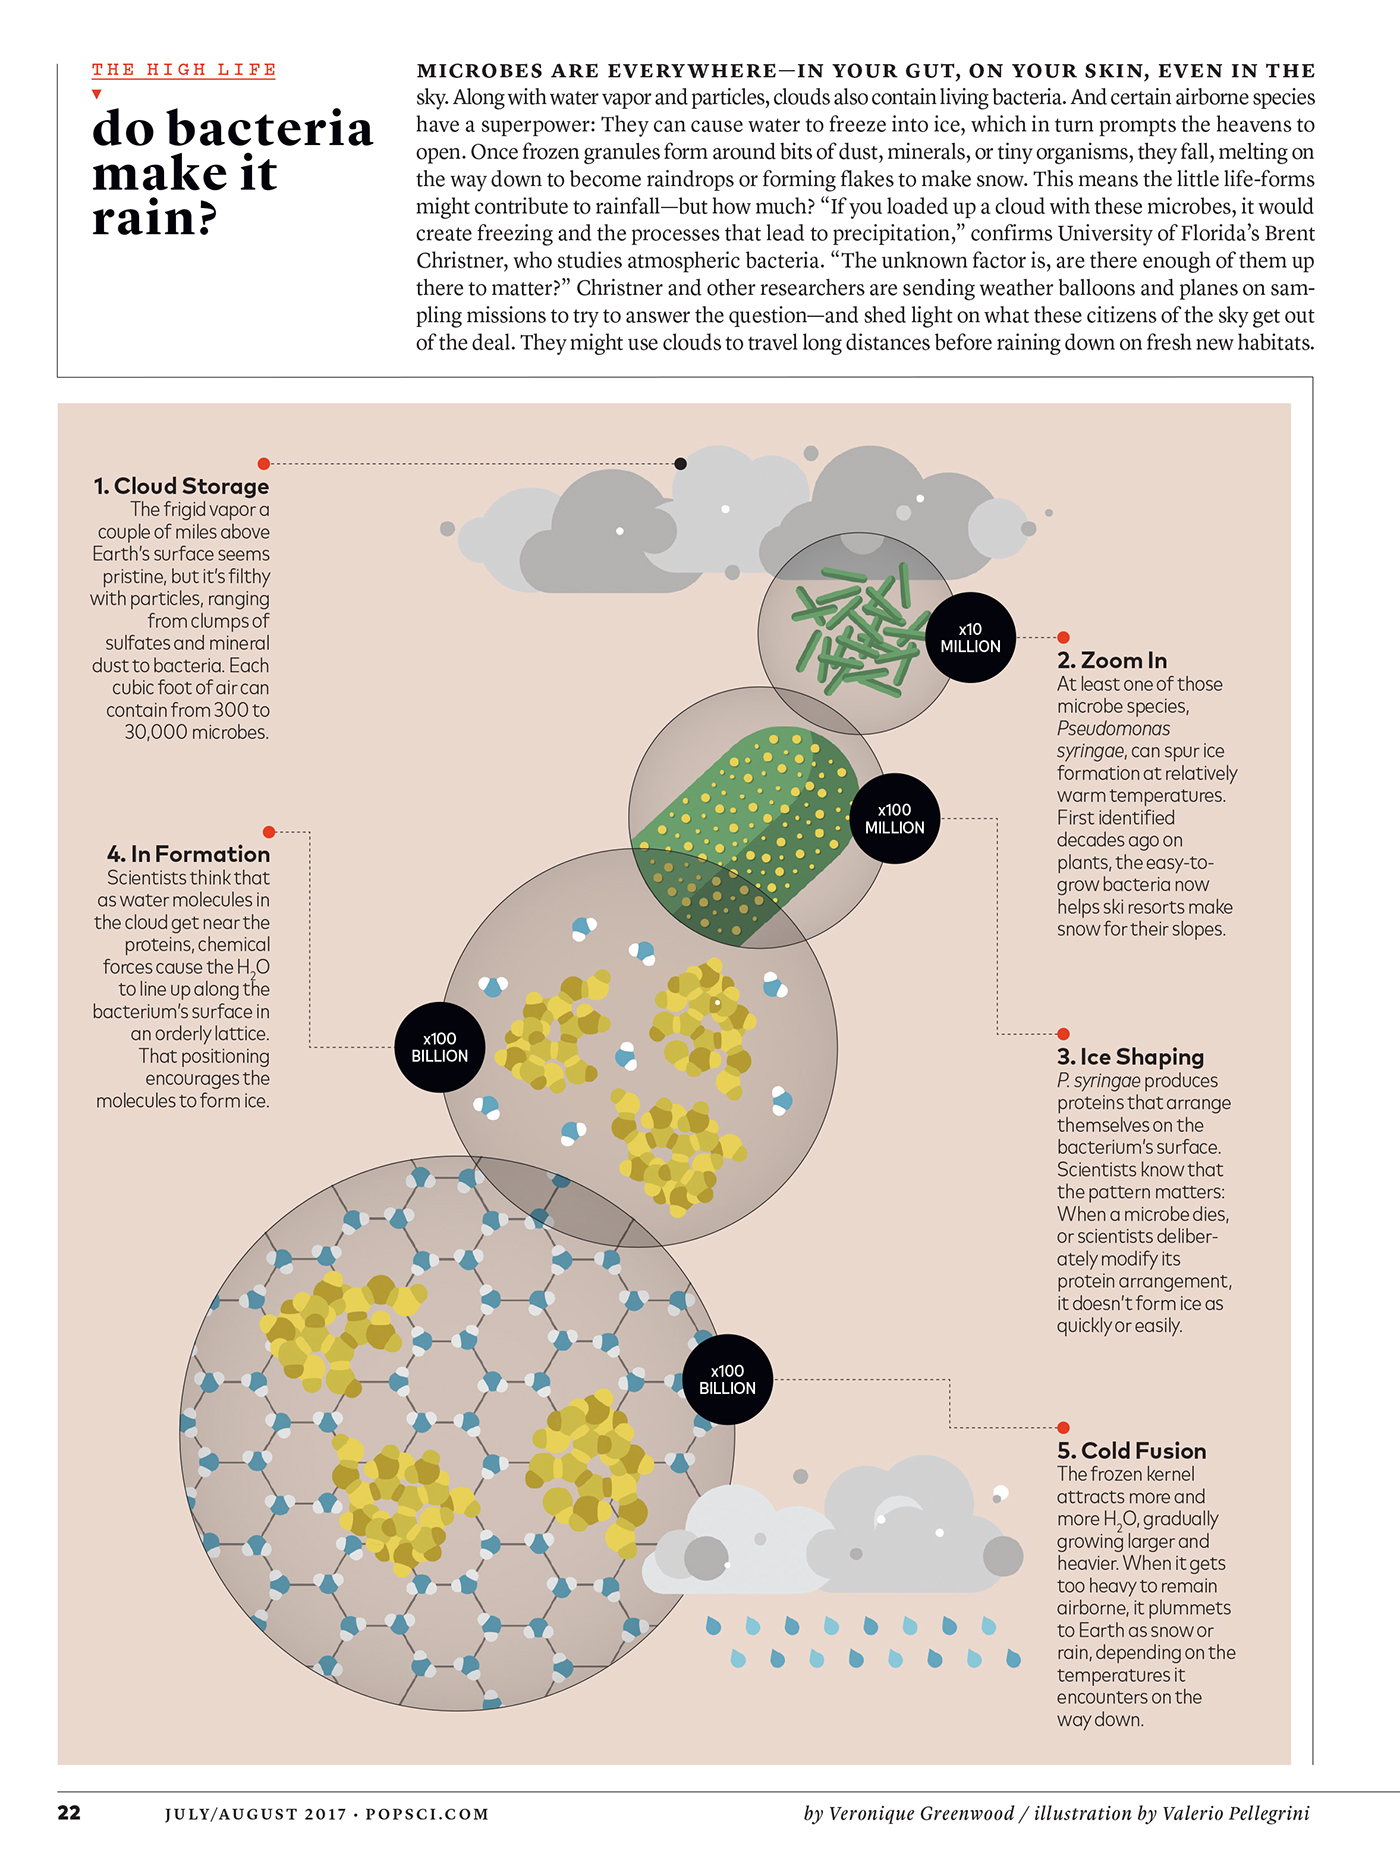 Data data visualization infographic ILLUSTRATION  design art graphic Popular Science science magazine